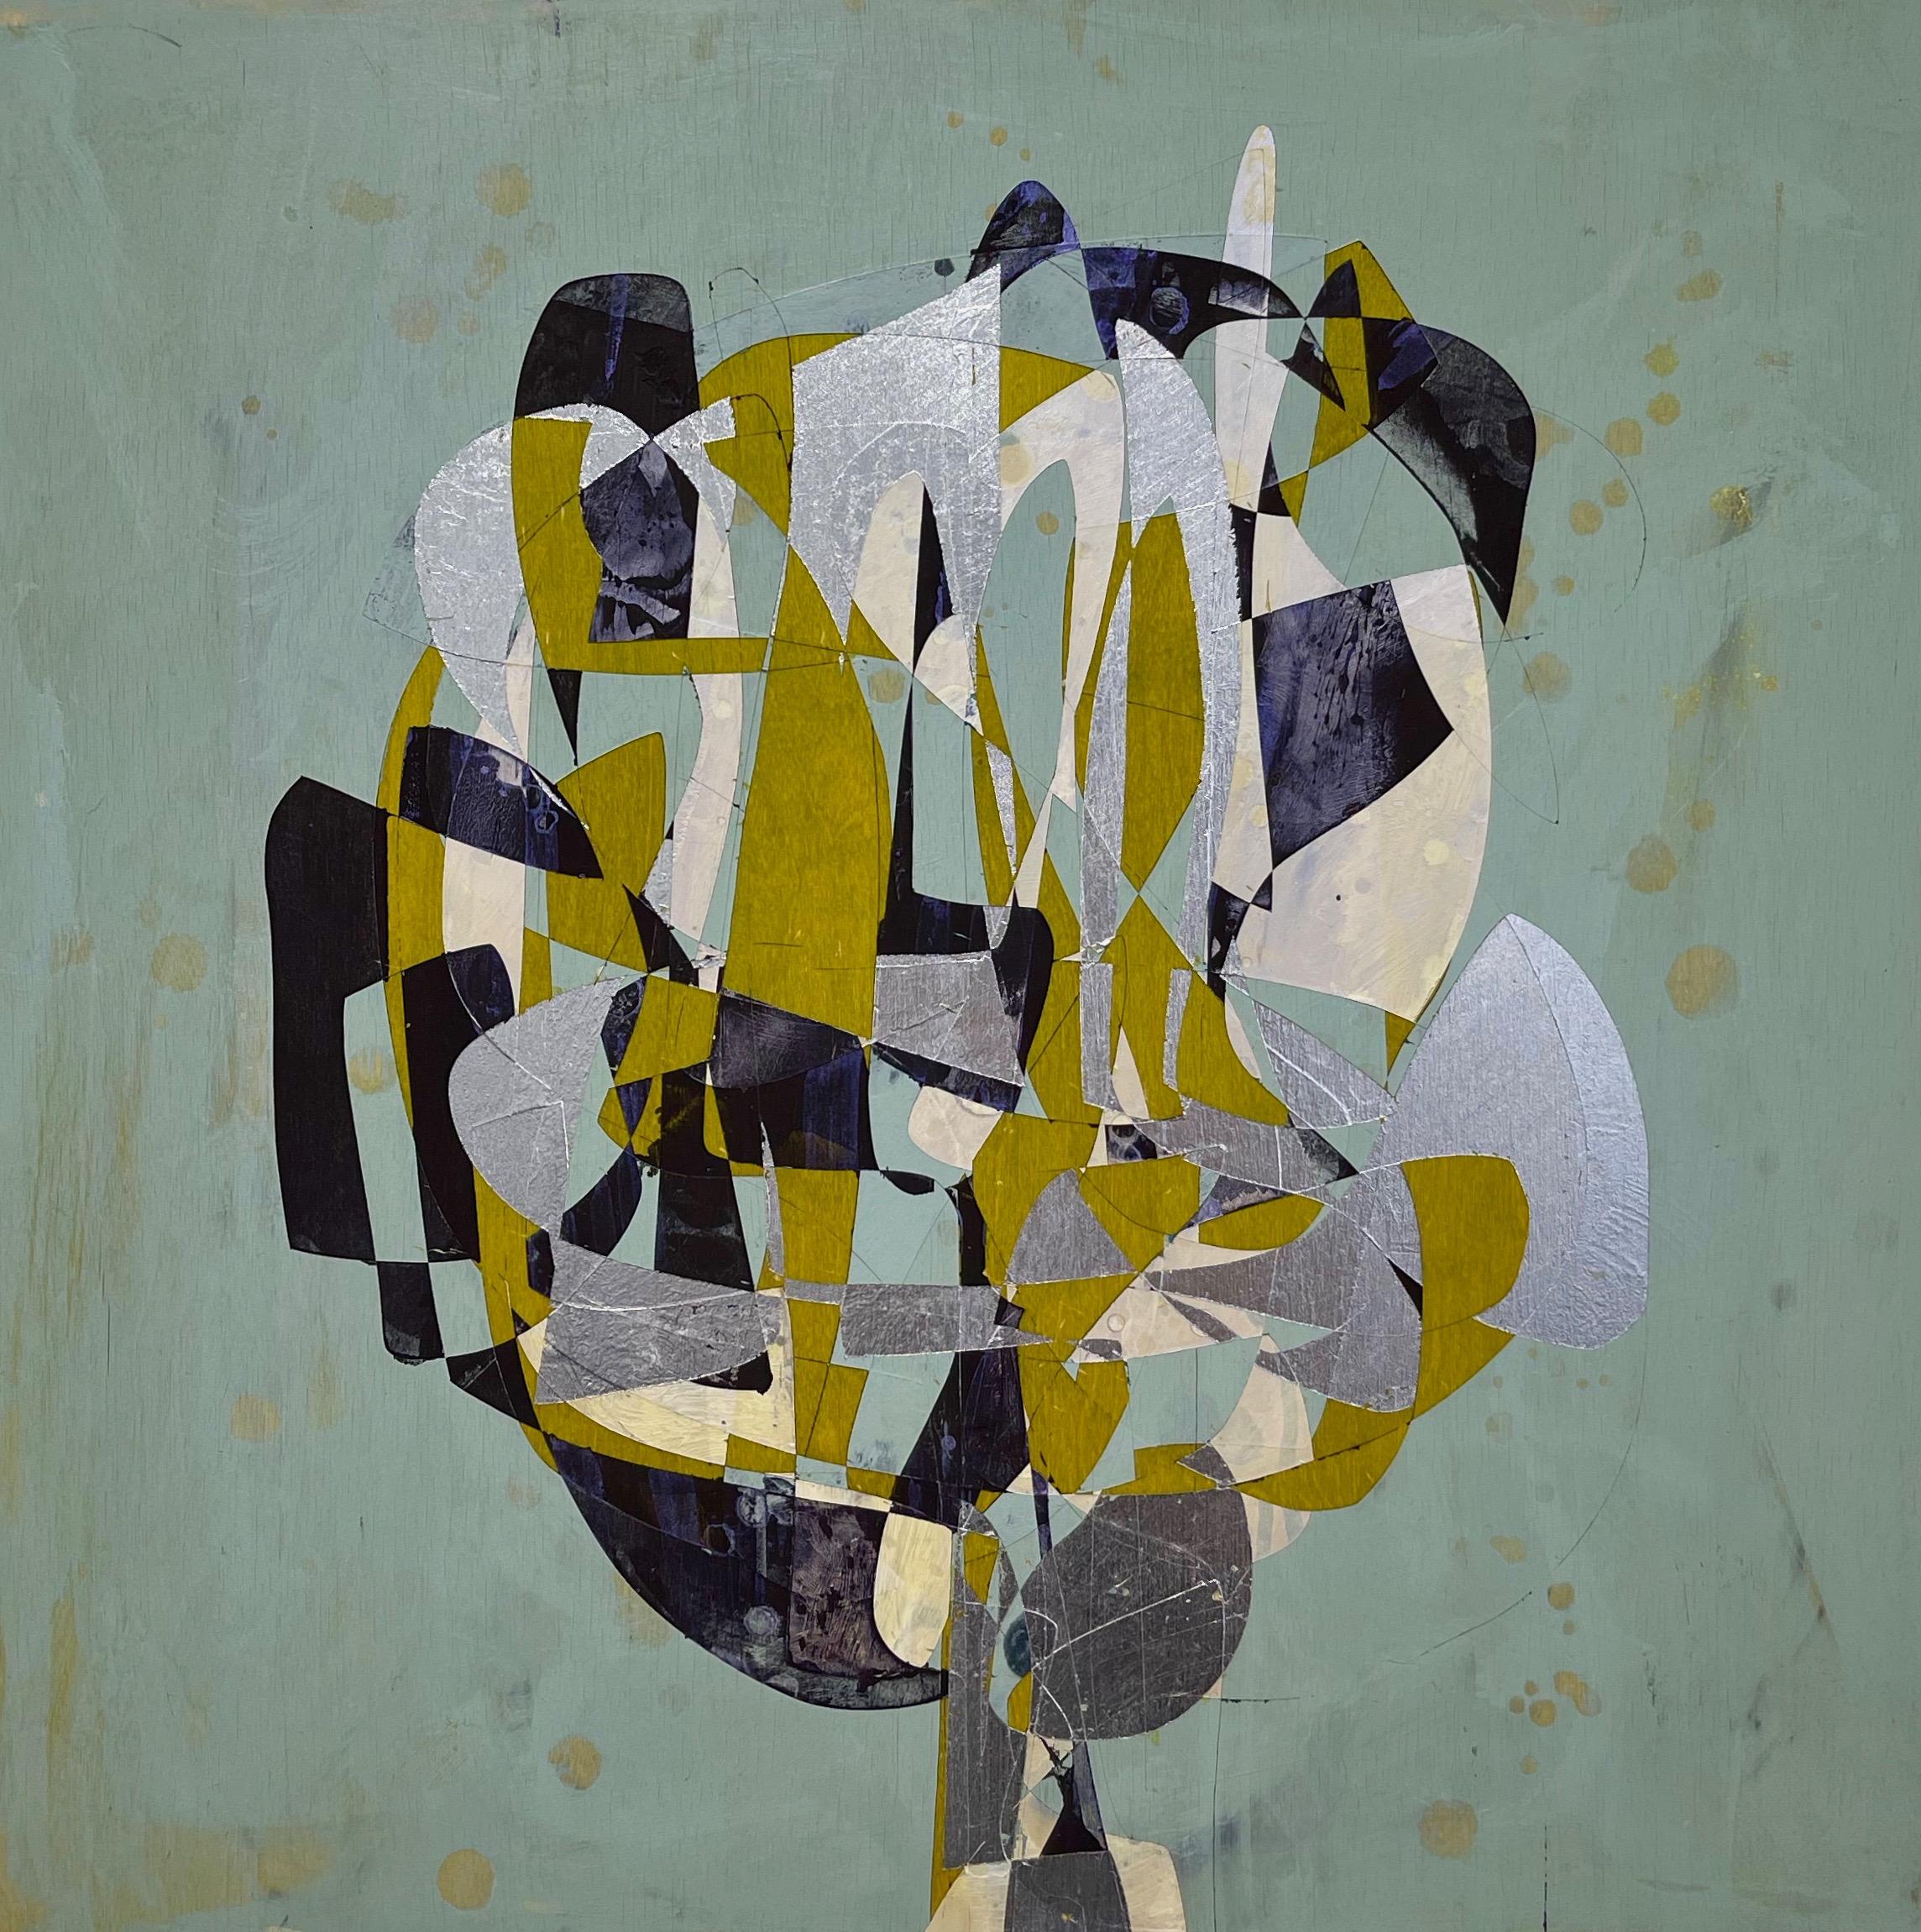 Jim Napierala Abstract Painting - Black Dutch, yellow and black geometric abstract painting on wood panel